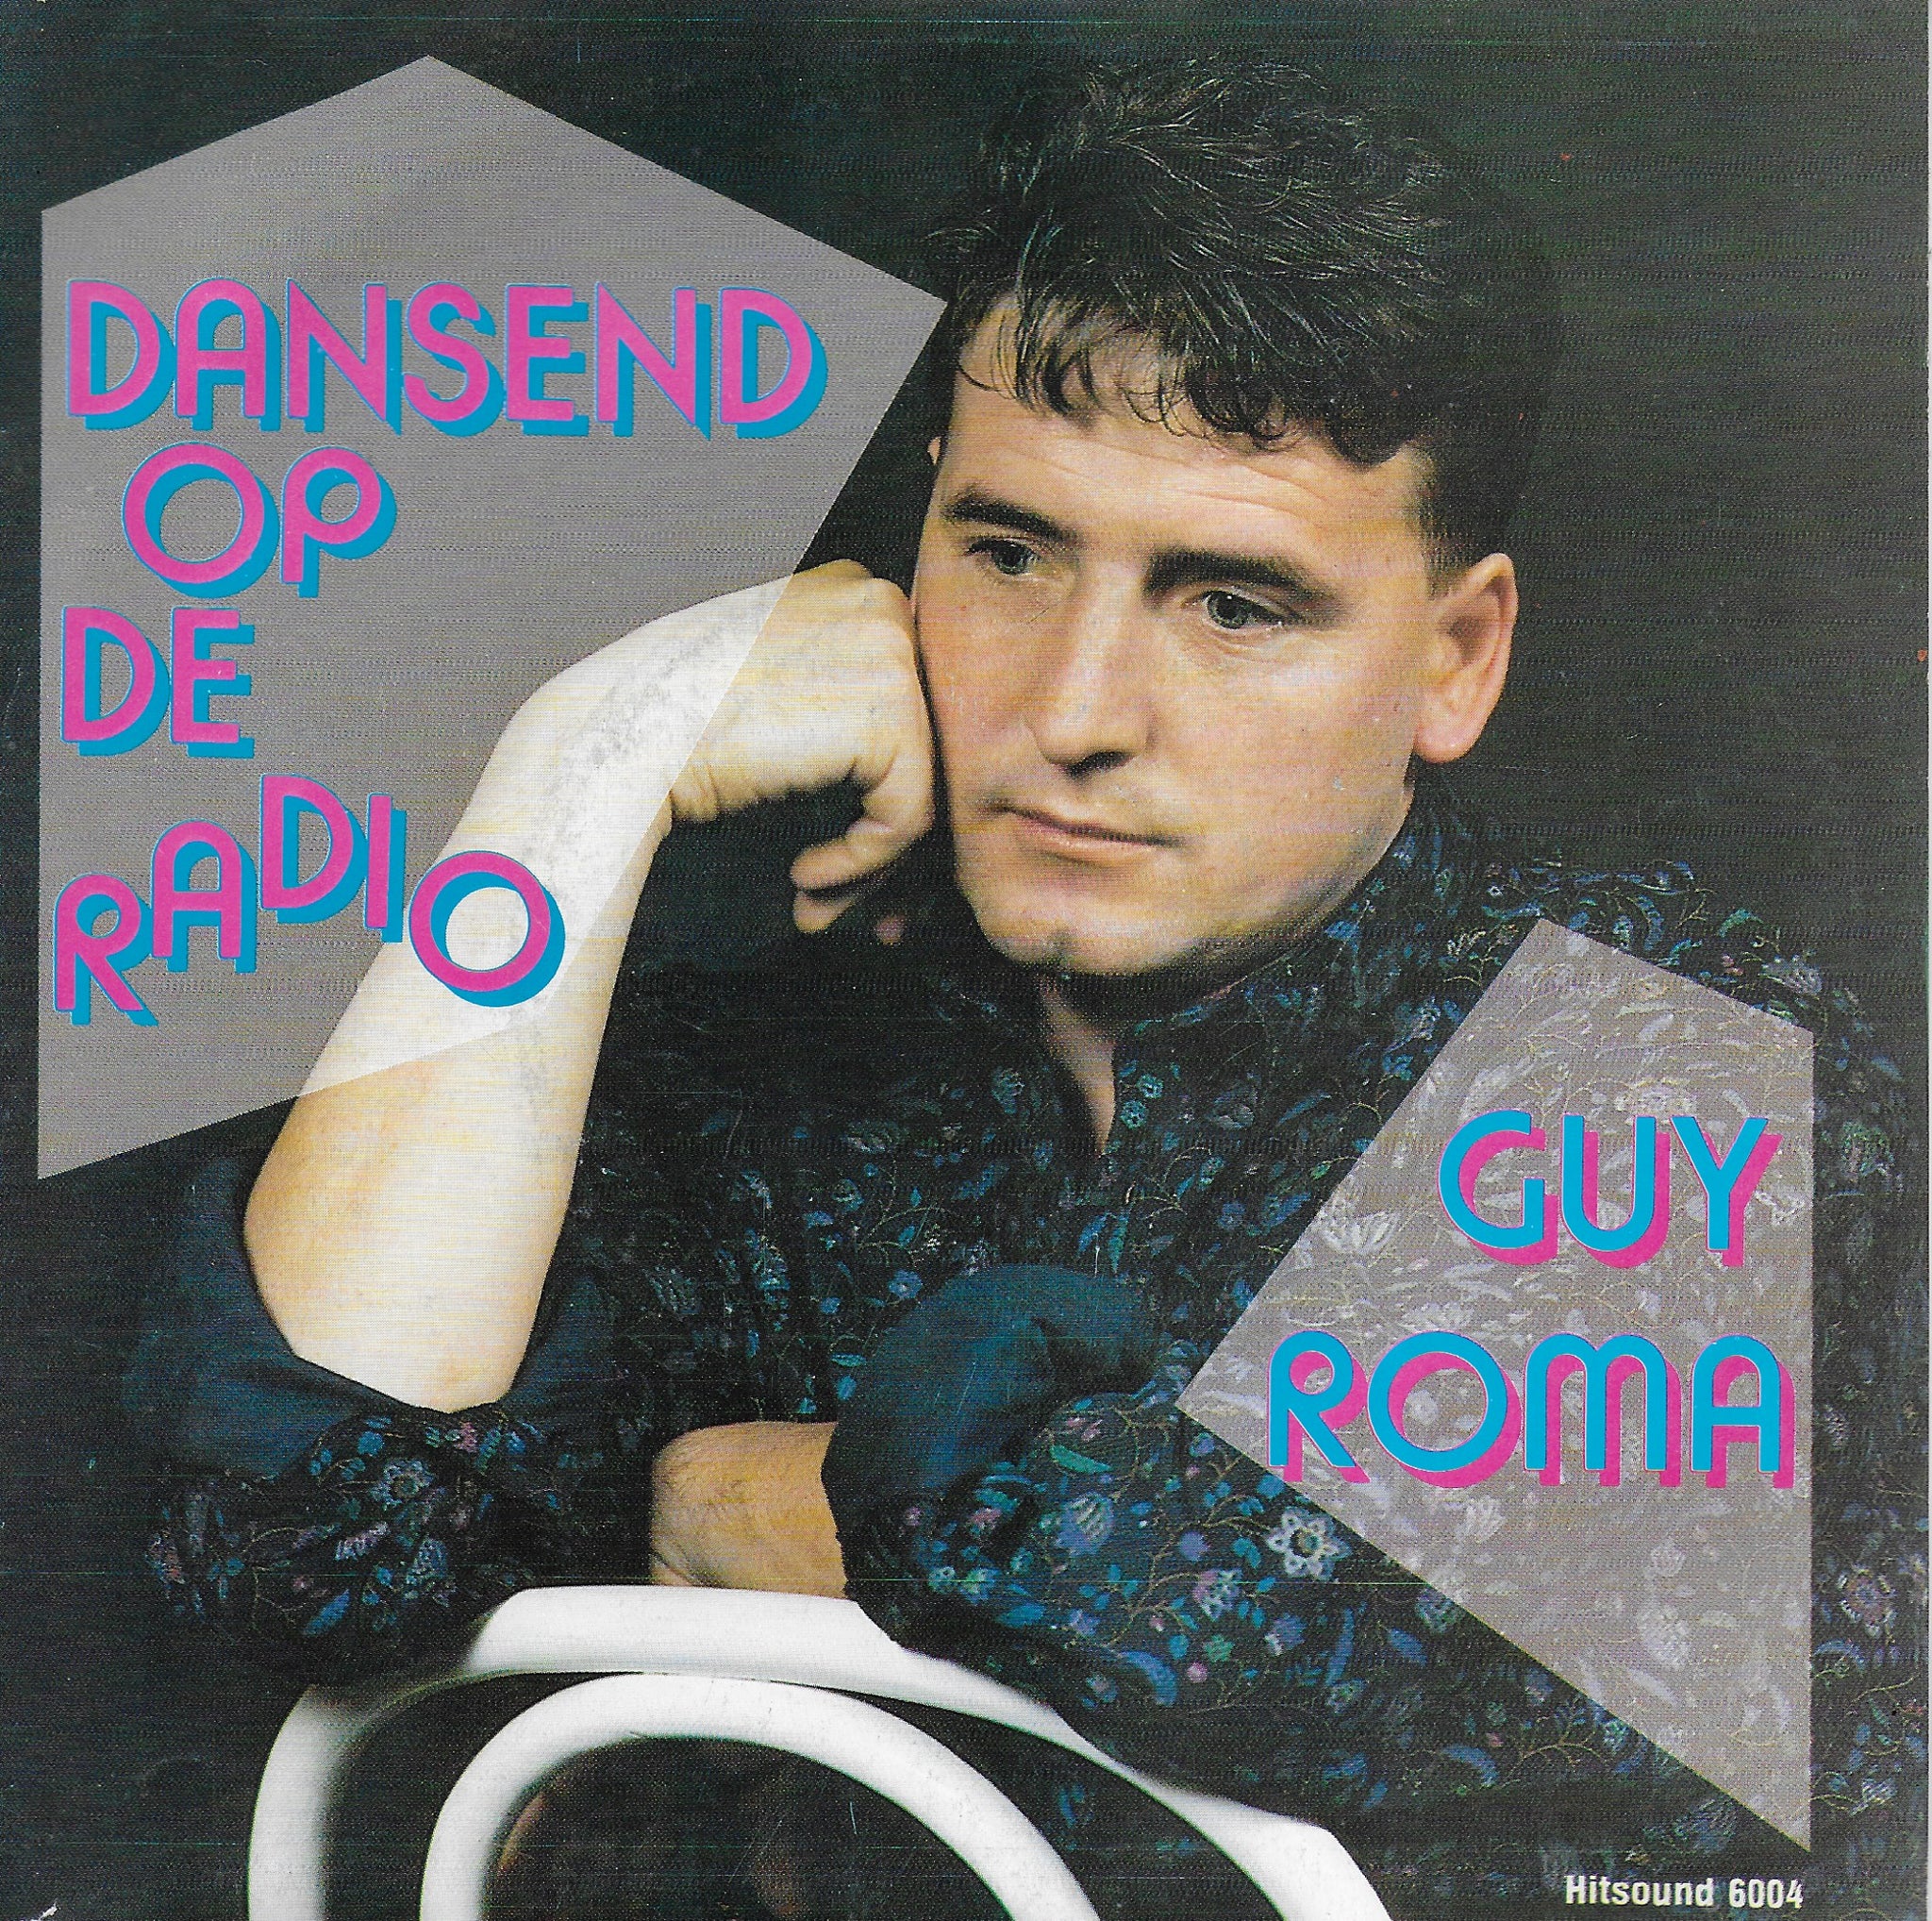 Guy Roma - Dansend op de radio